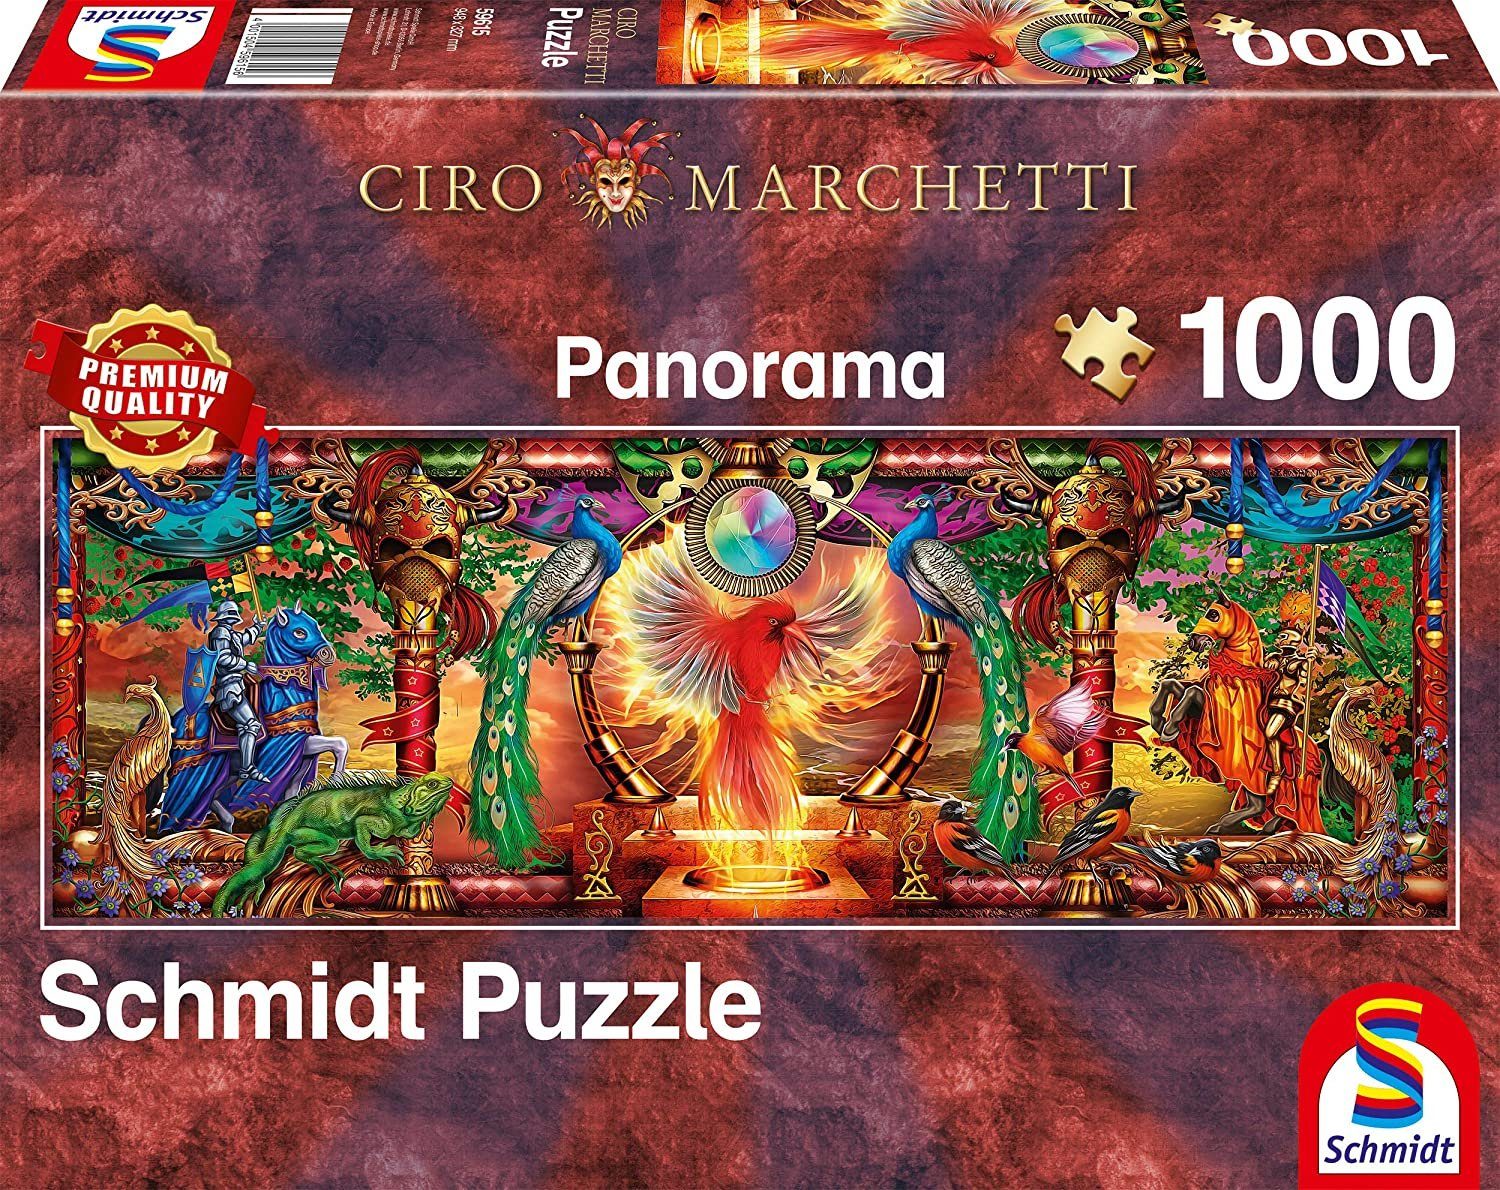 Schmidt Spiele Puzzle Schmidt 59615 - Premium Quality - Ciro Marchetti - Im Reich des Feuervogels, 1000 Teile Panorama-Puzzle, 1000 Puzzleteile | Puzzle